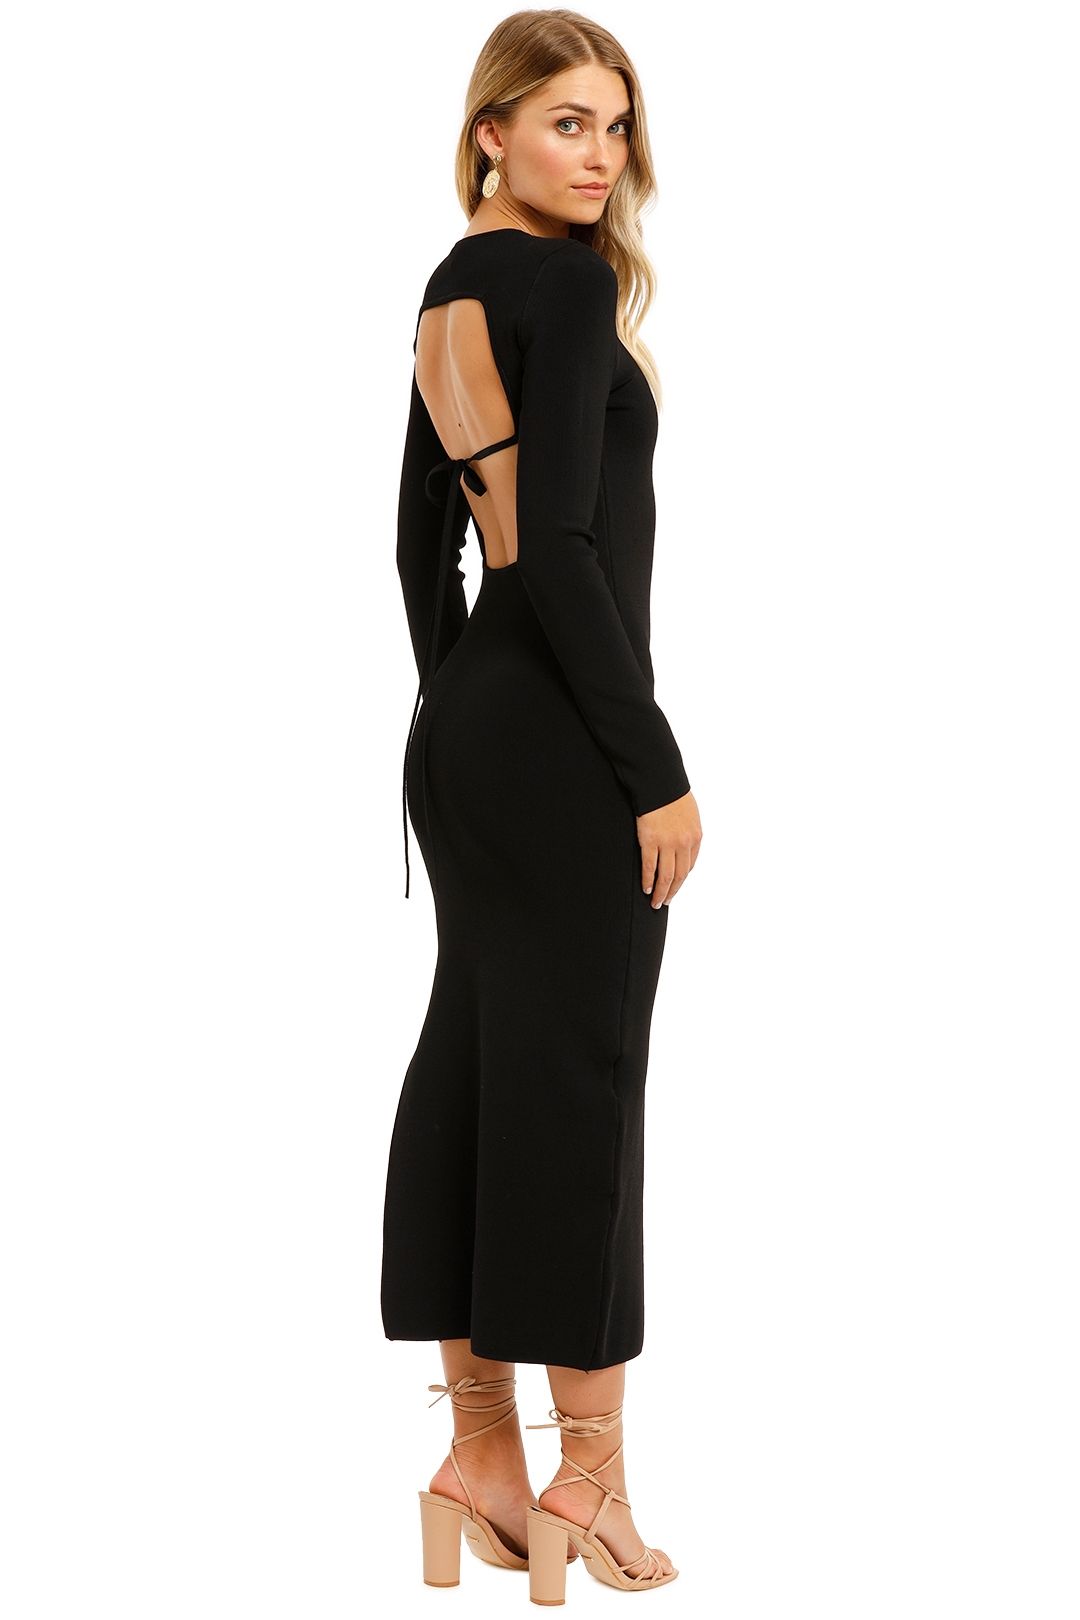 Shona Joy Long Sleeve Backless Midi Dress Black Bodycon